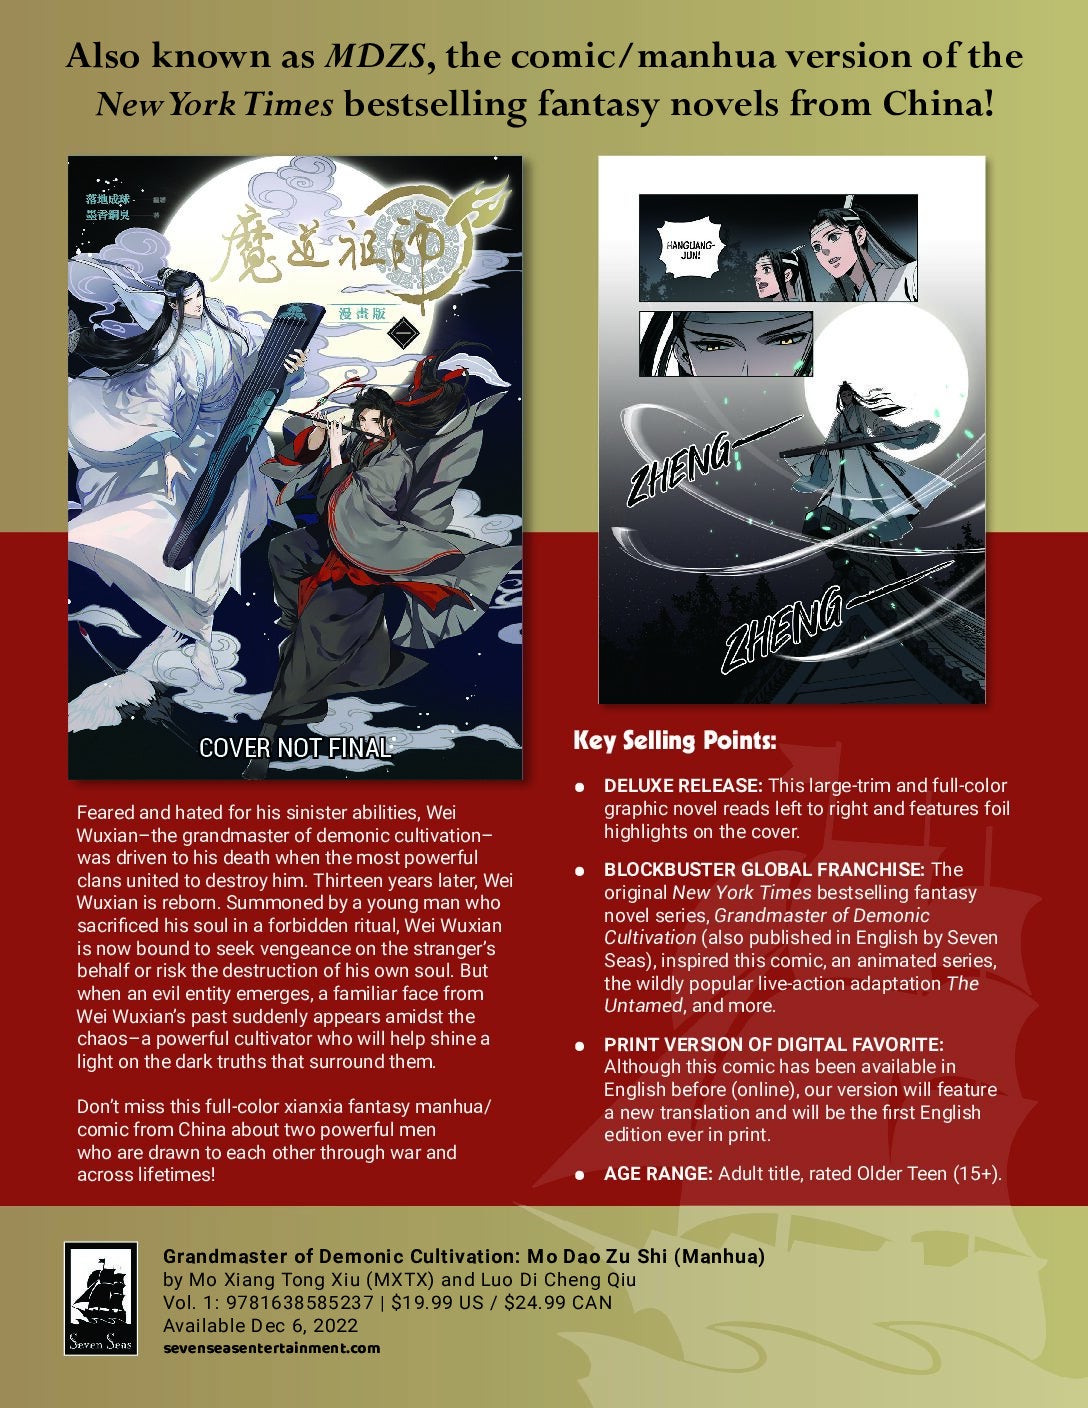 Grandmaster of Demonic Cultivation: Mo Dao Zu Shi (The Comic / Manhua) Vol. 1 cover